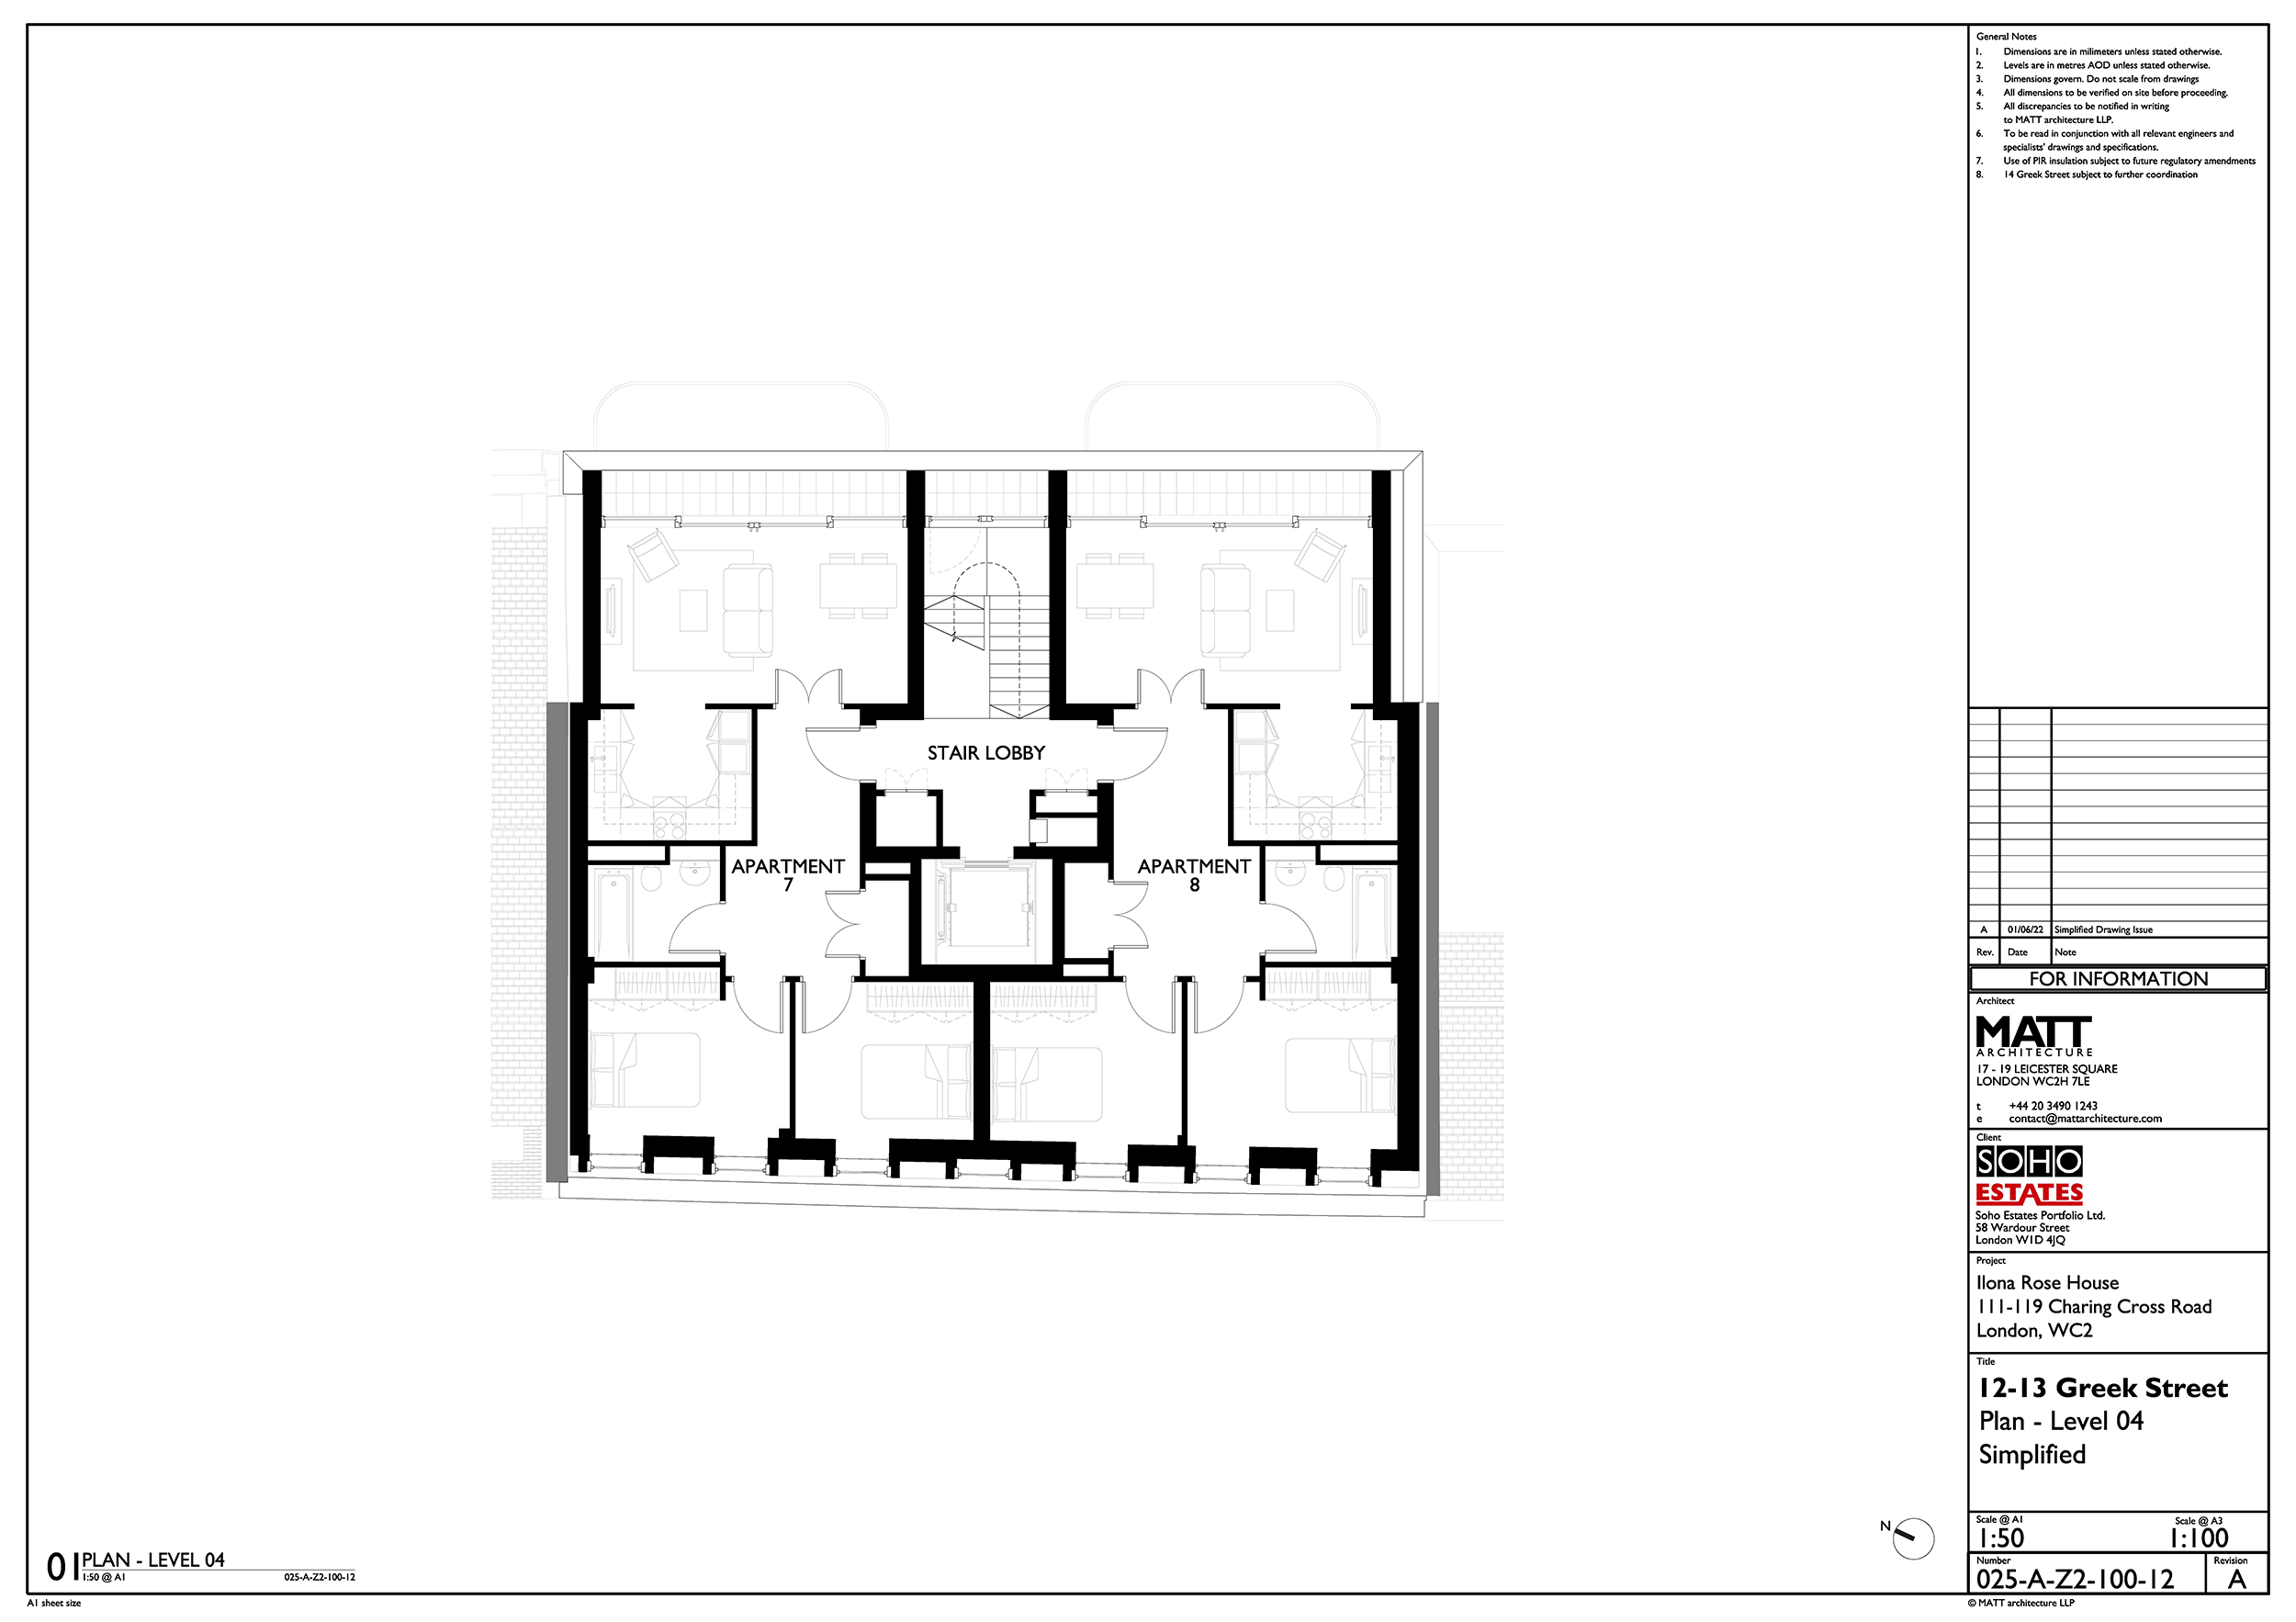 Fourth floor plan of 12-13 Greek Street